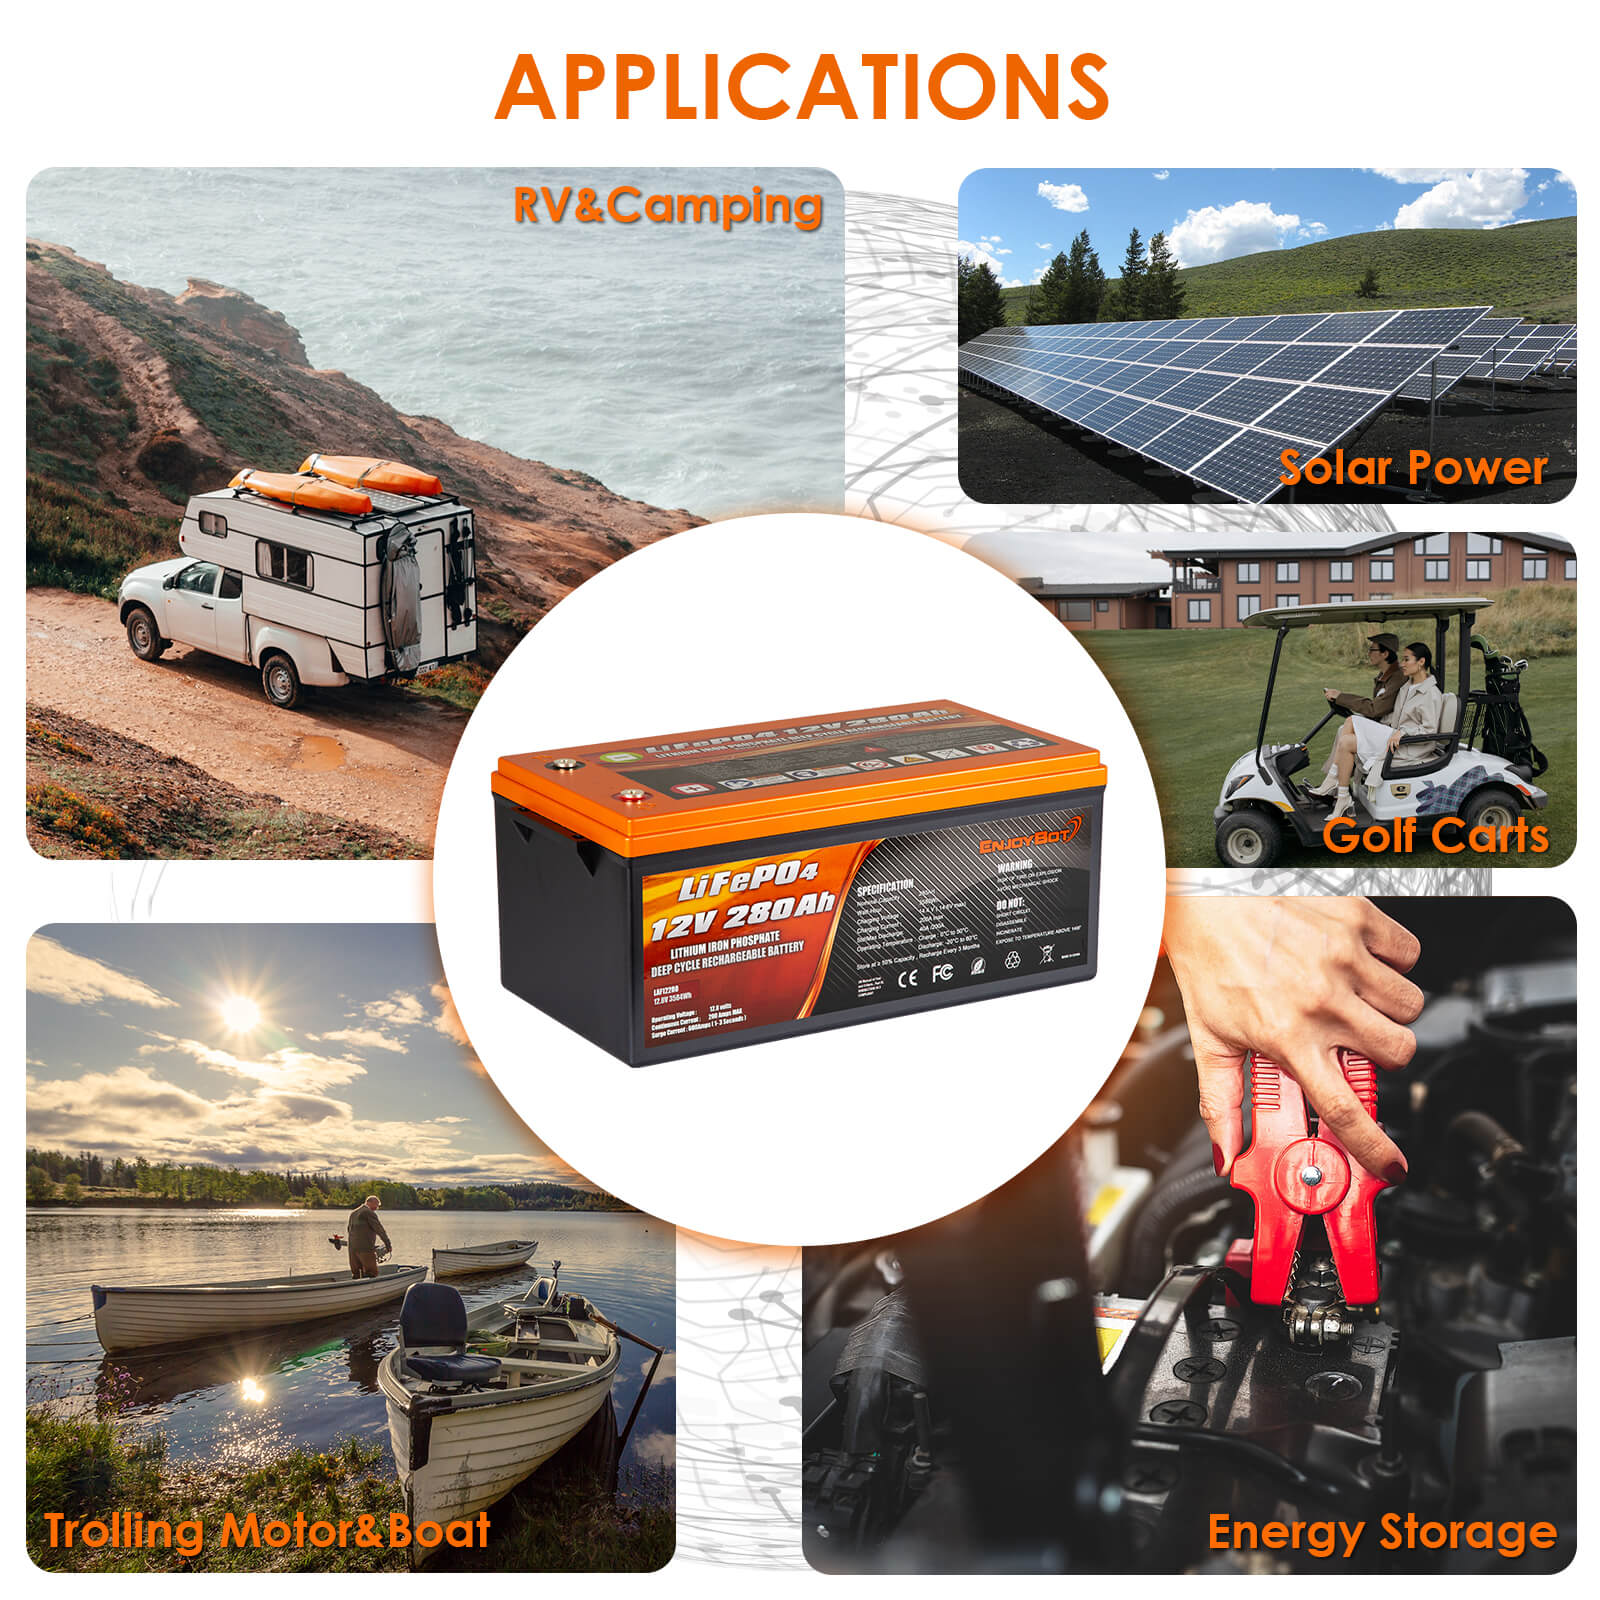 Enjoybot 12v 280ah LiFePO4 Battery - Used for RV, Champer, Solar Off-grid, Golf Cart, Trolling Motor, Energy Storage